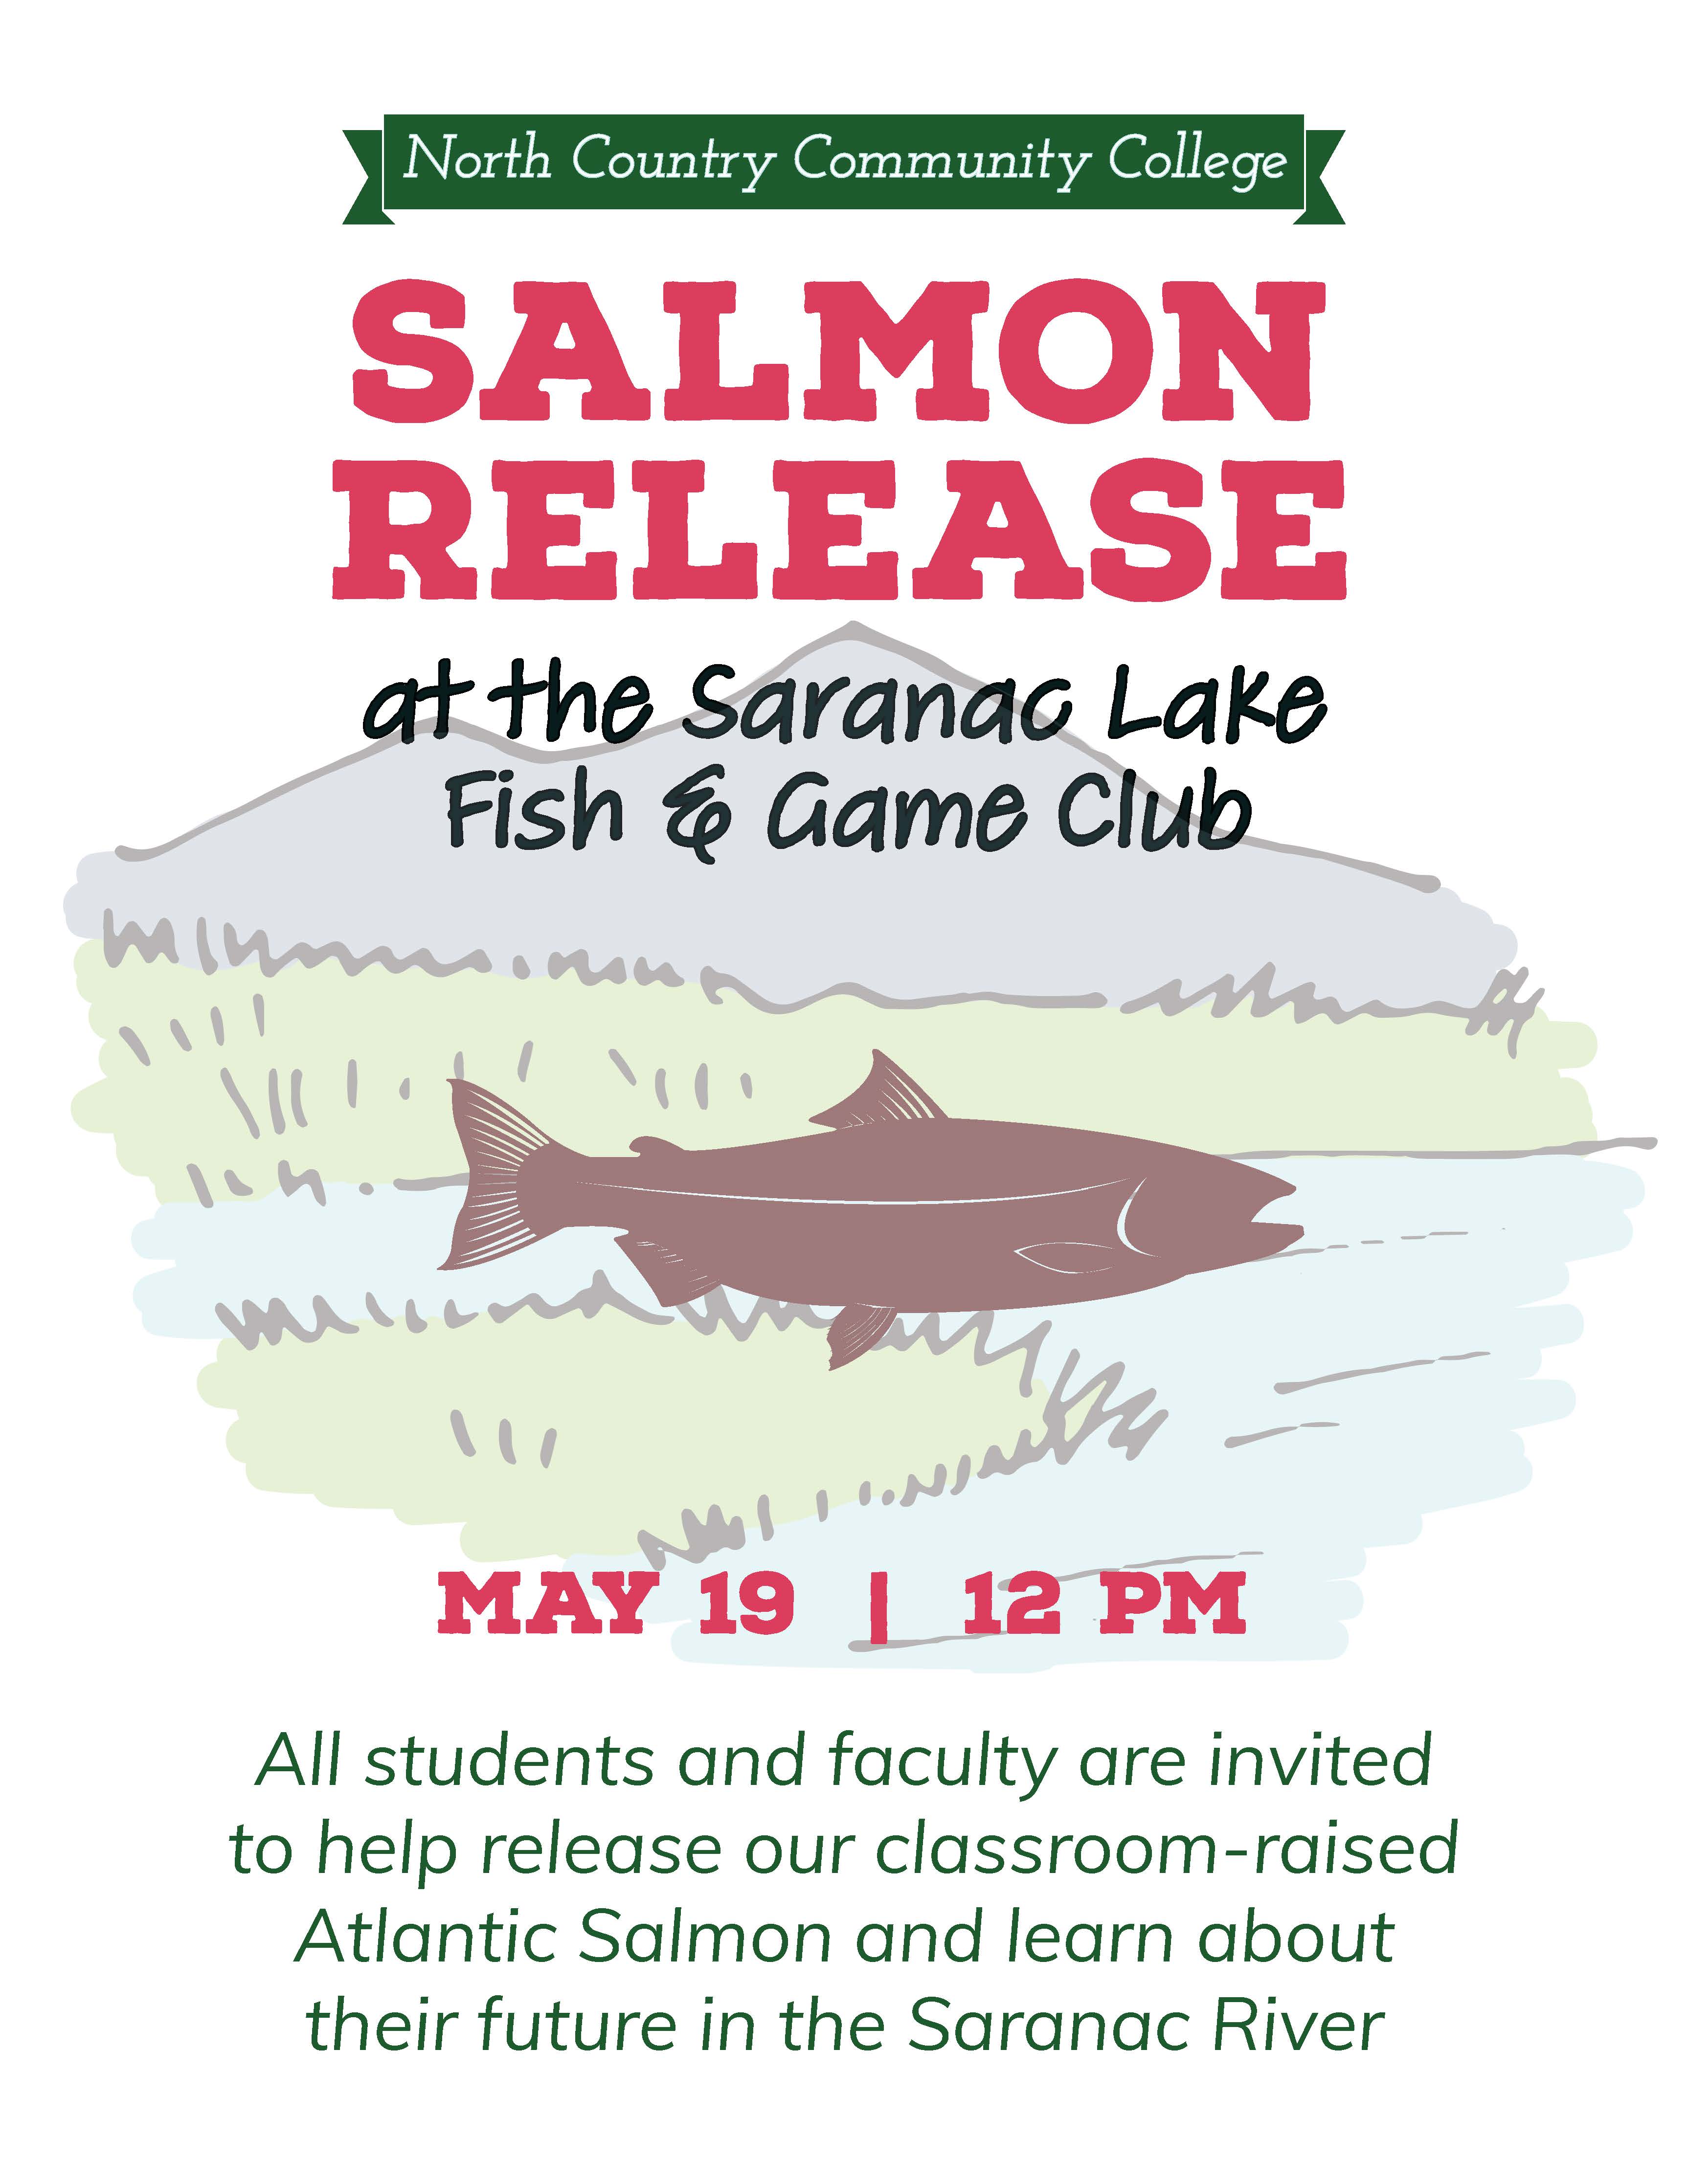 Salmon Release at Saranac Lake Fish & Game Club